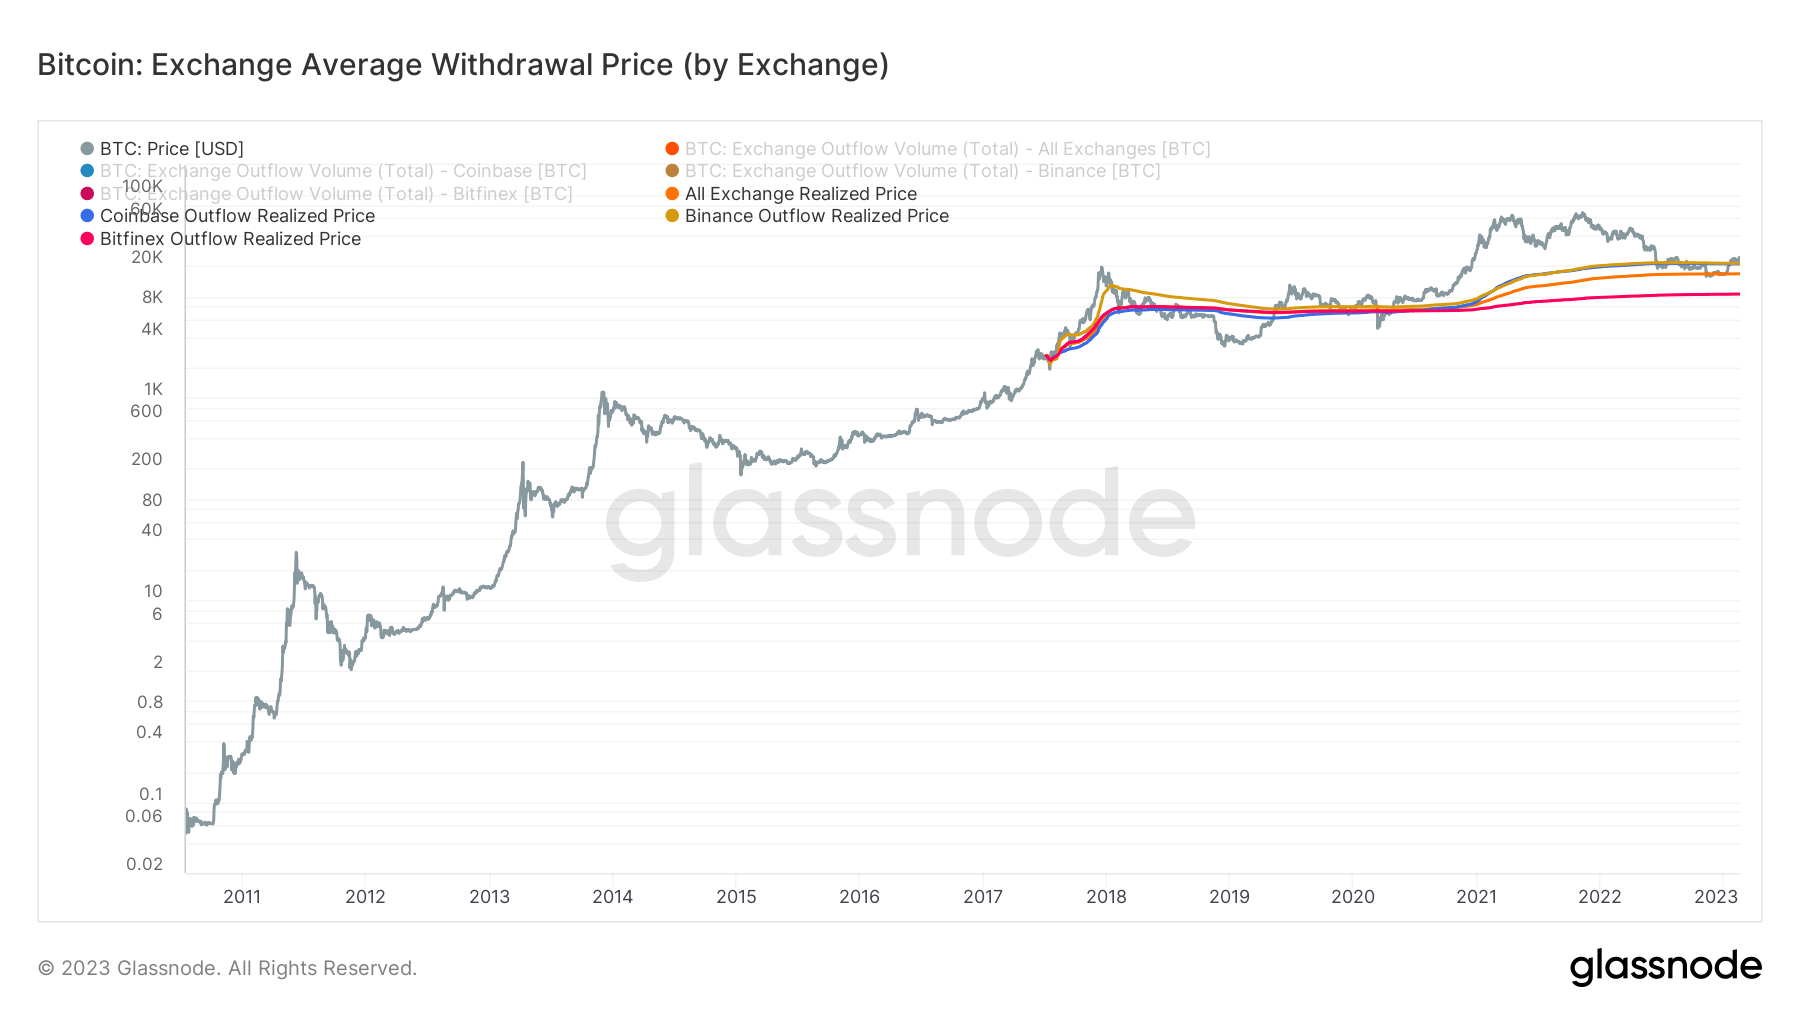 Exchange withdrawal price: (Source: Glassnode)